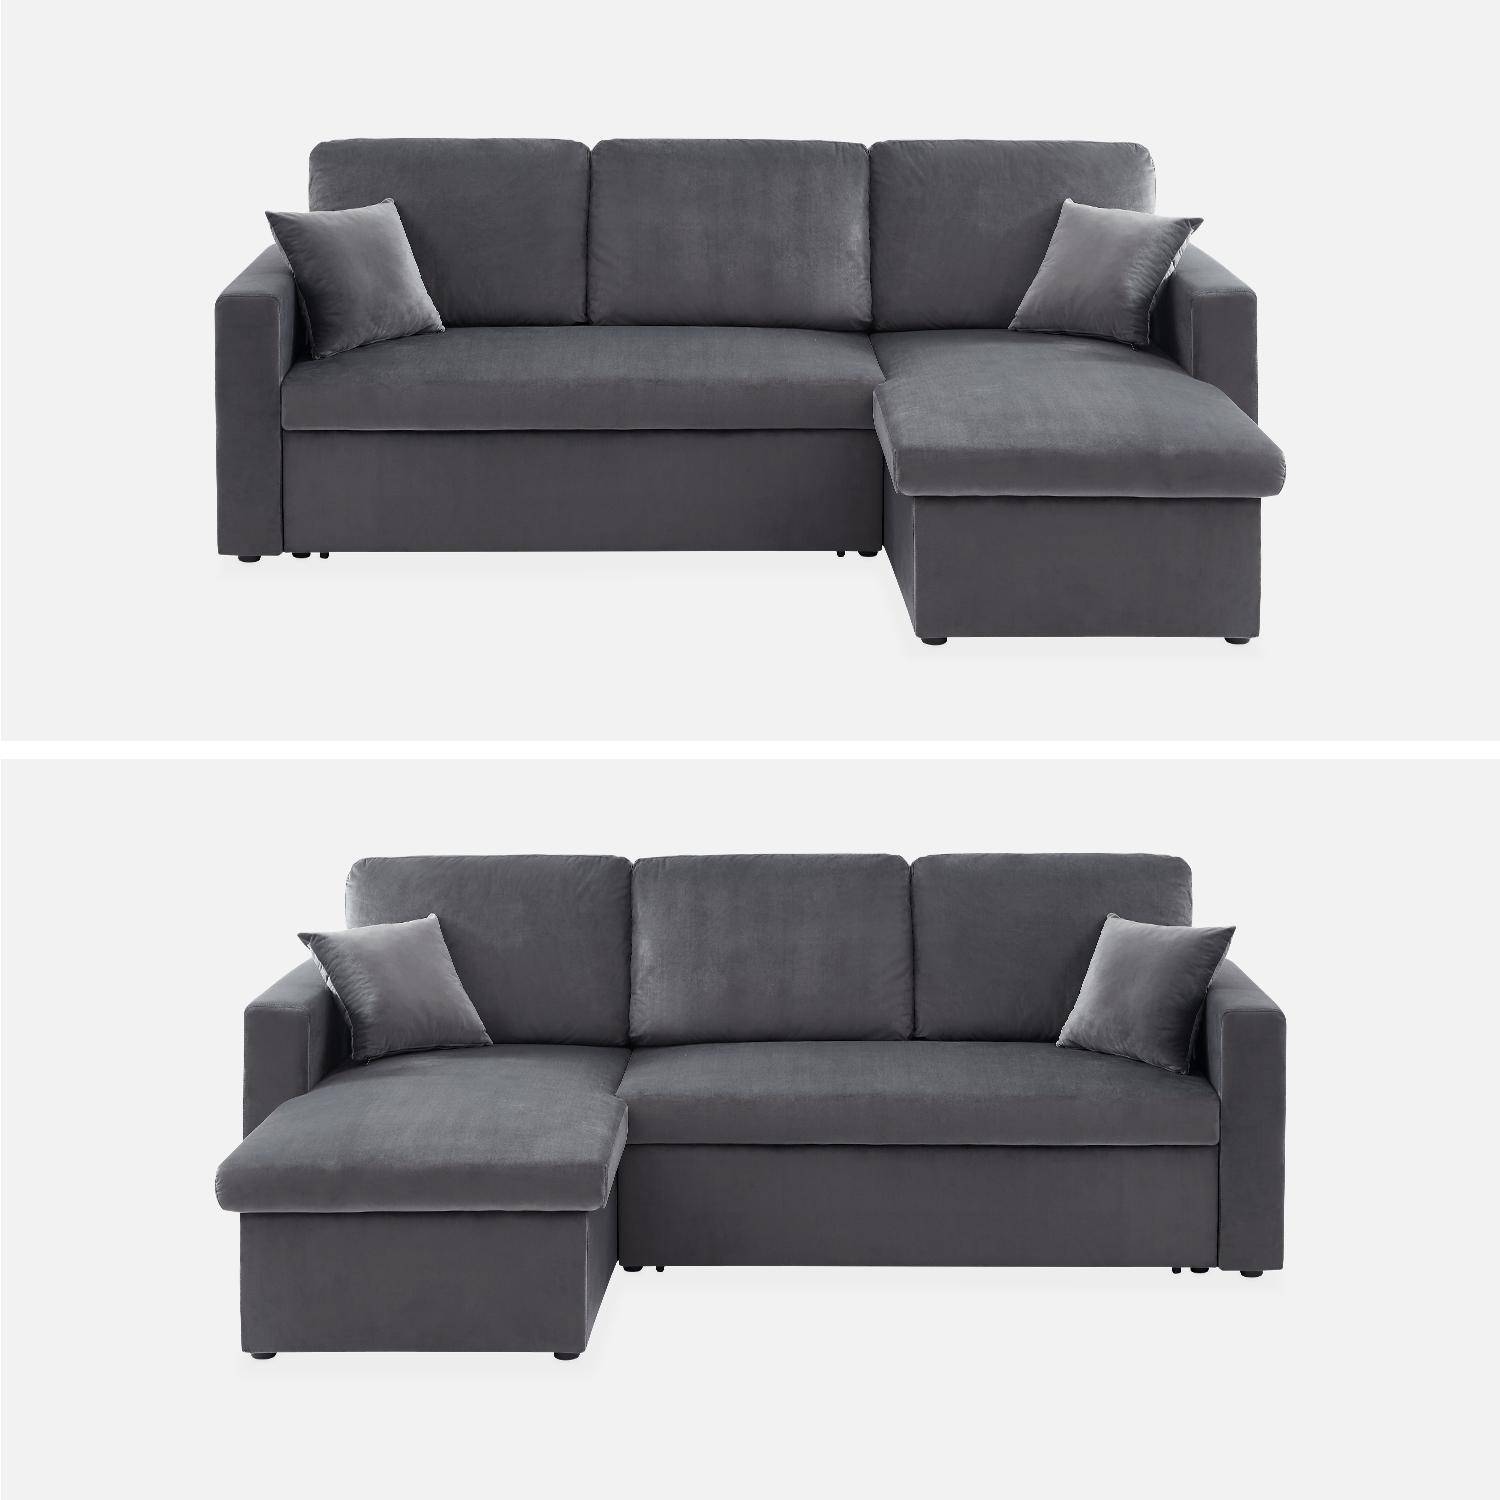 Dark grey velvet 3-seater convertible corner sofa, reversible corner armchair, storage box, modular bed Photo8